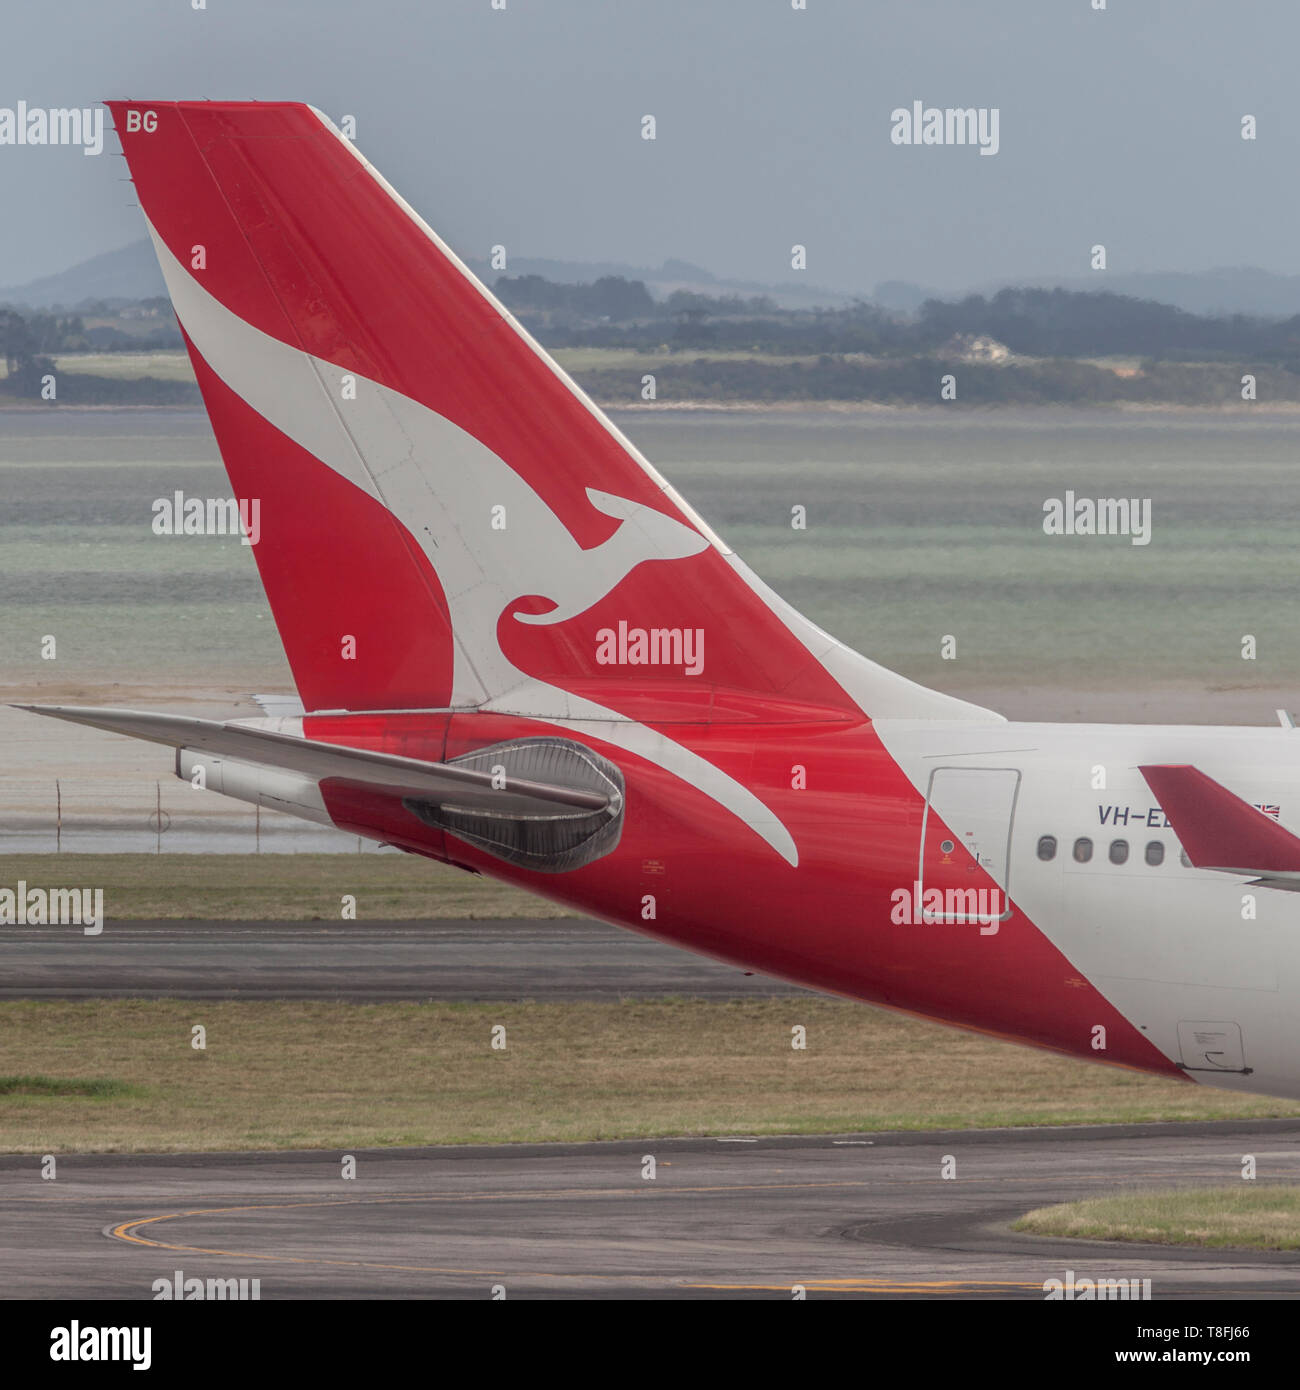 QANTAS logo on tail fin of passenger aircraft Stock Photo - Alamy